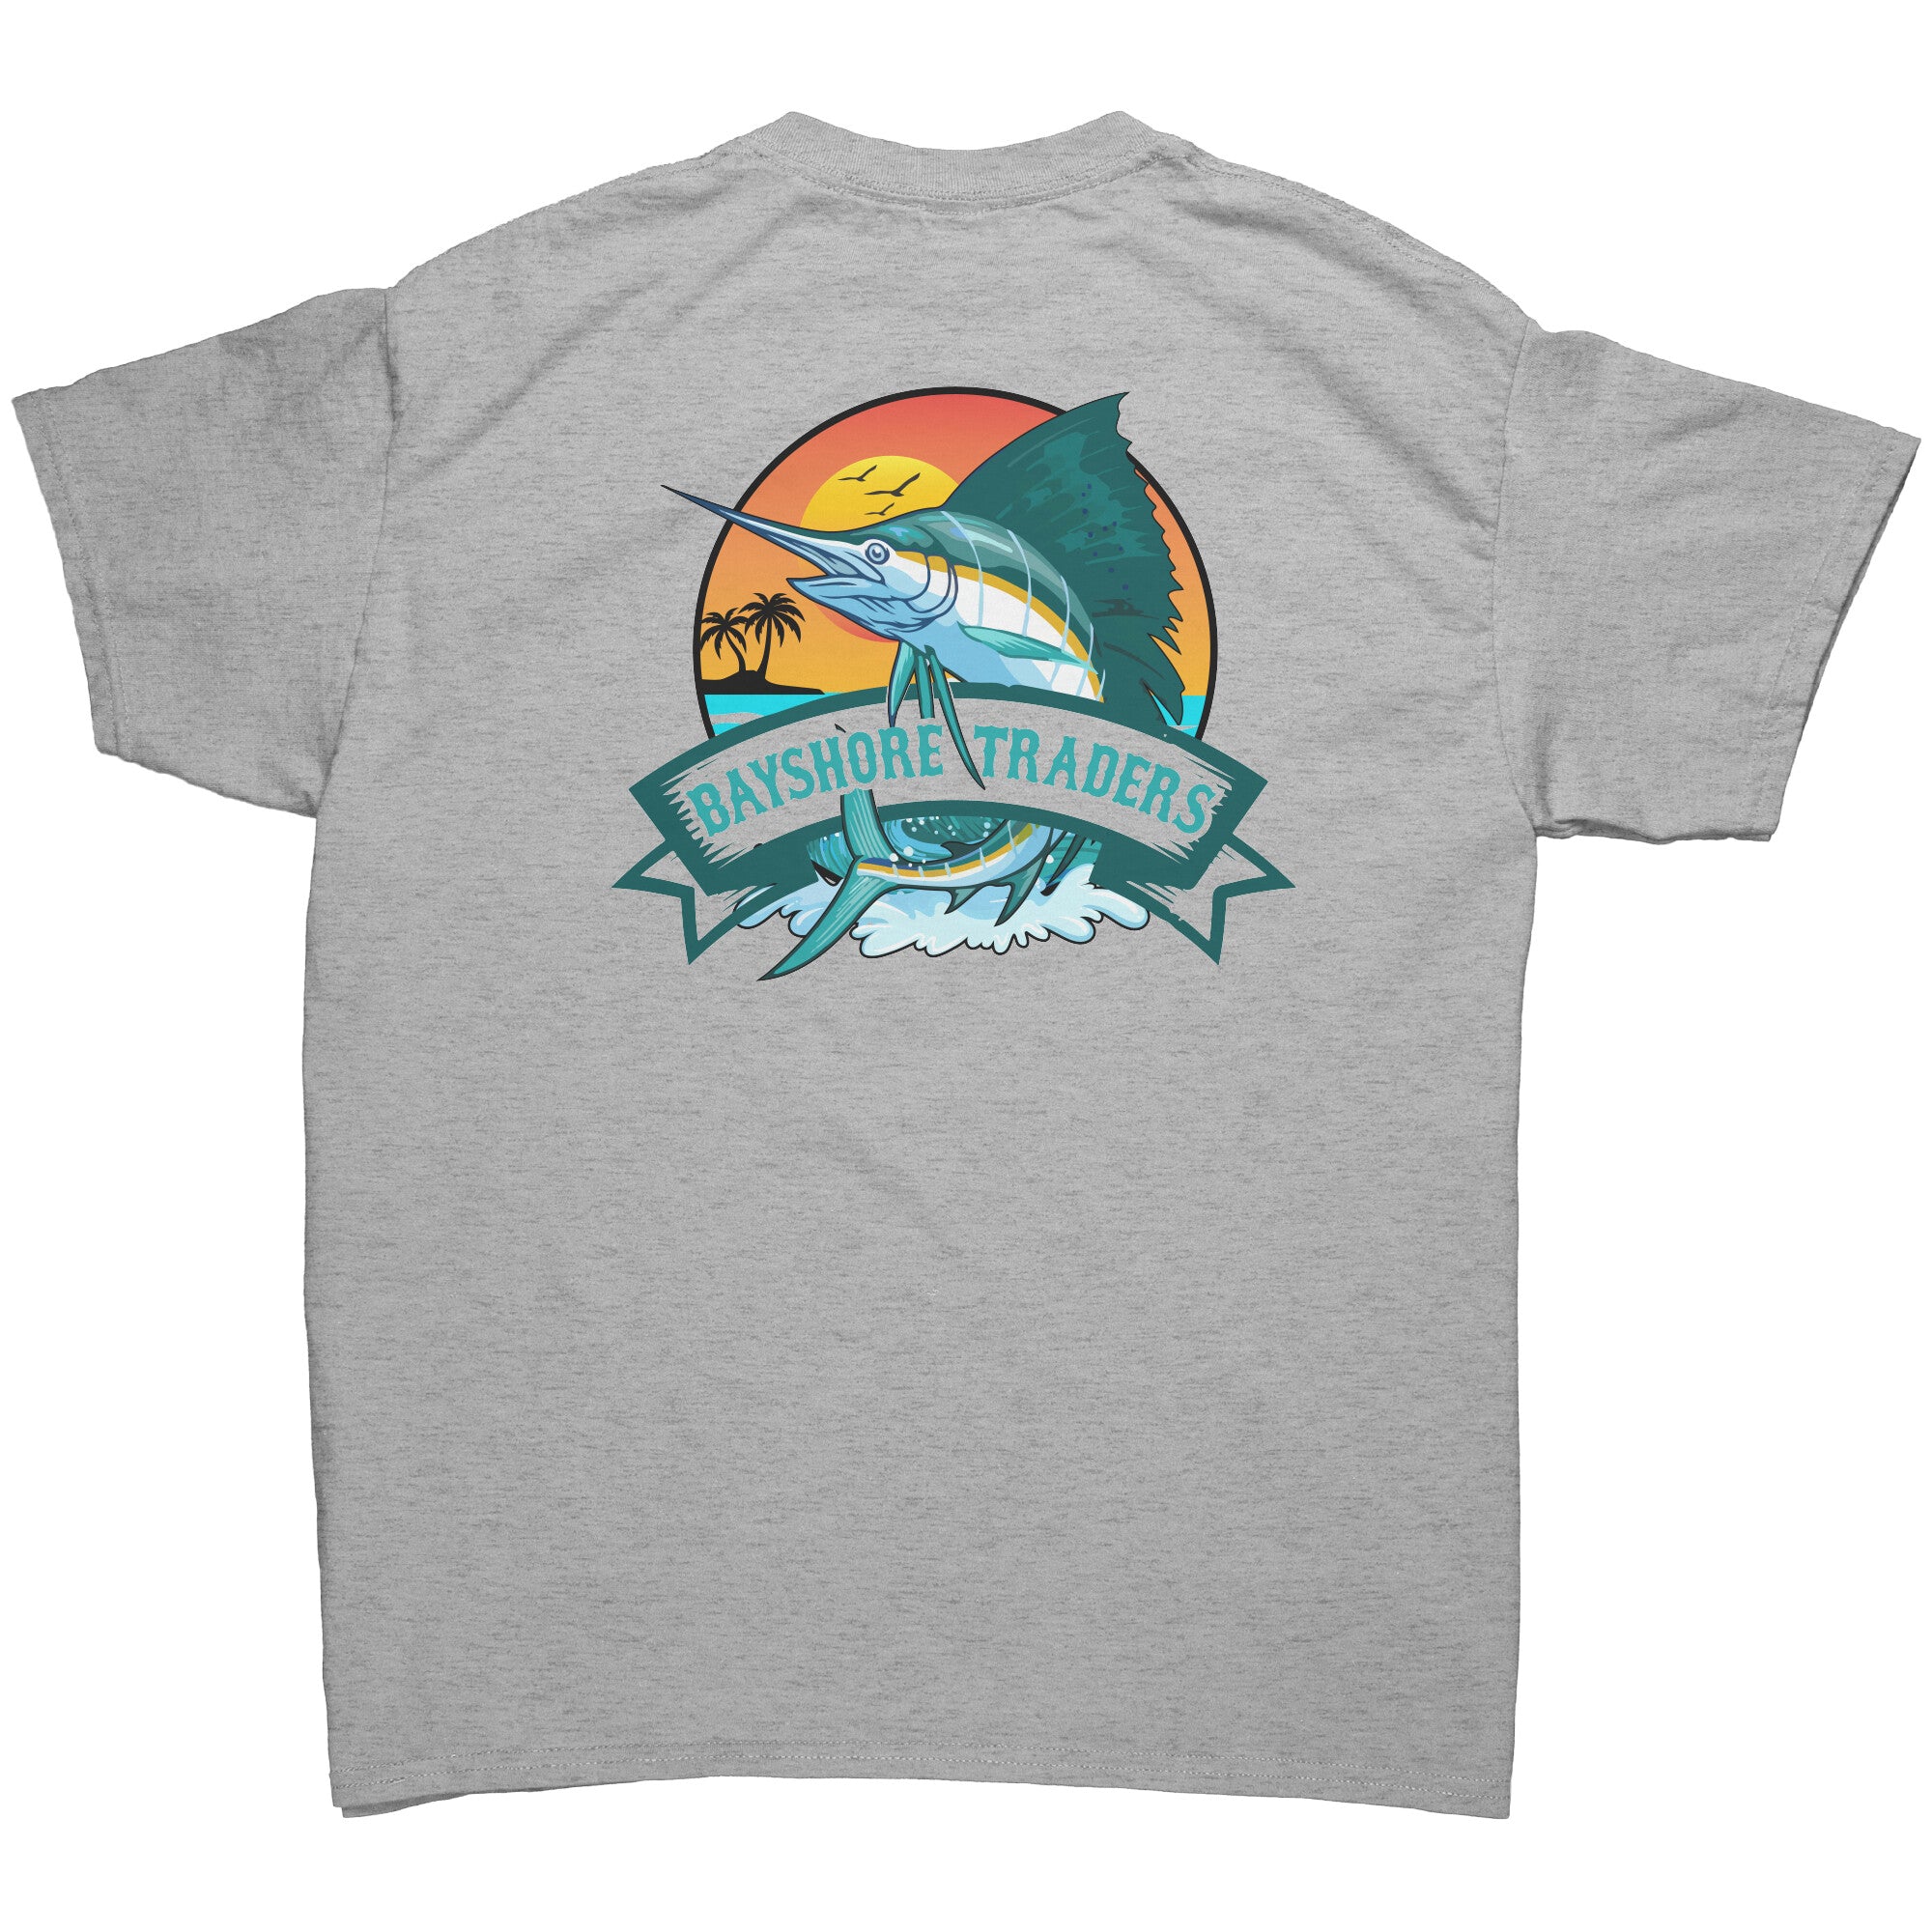 fishing logos for t shirts